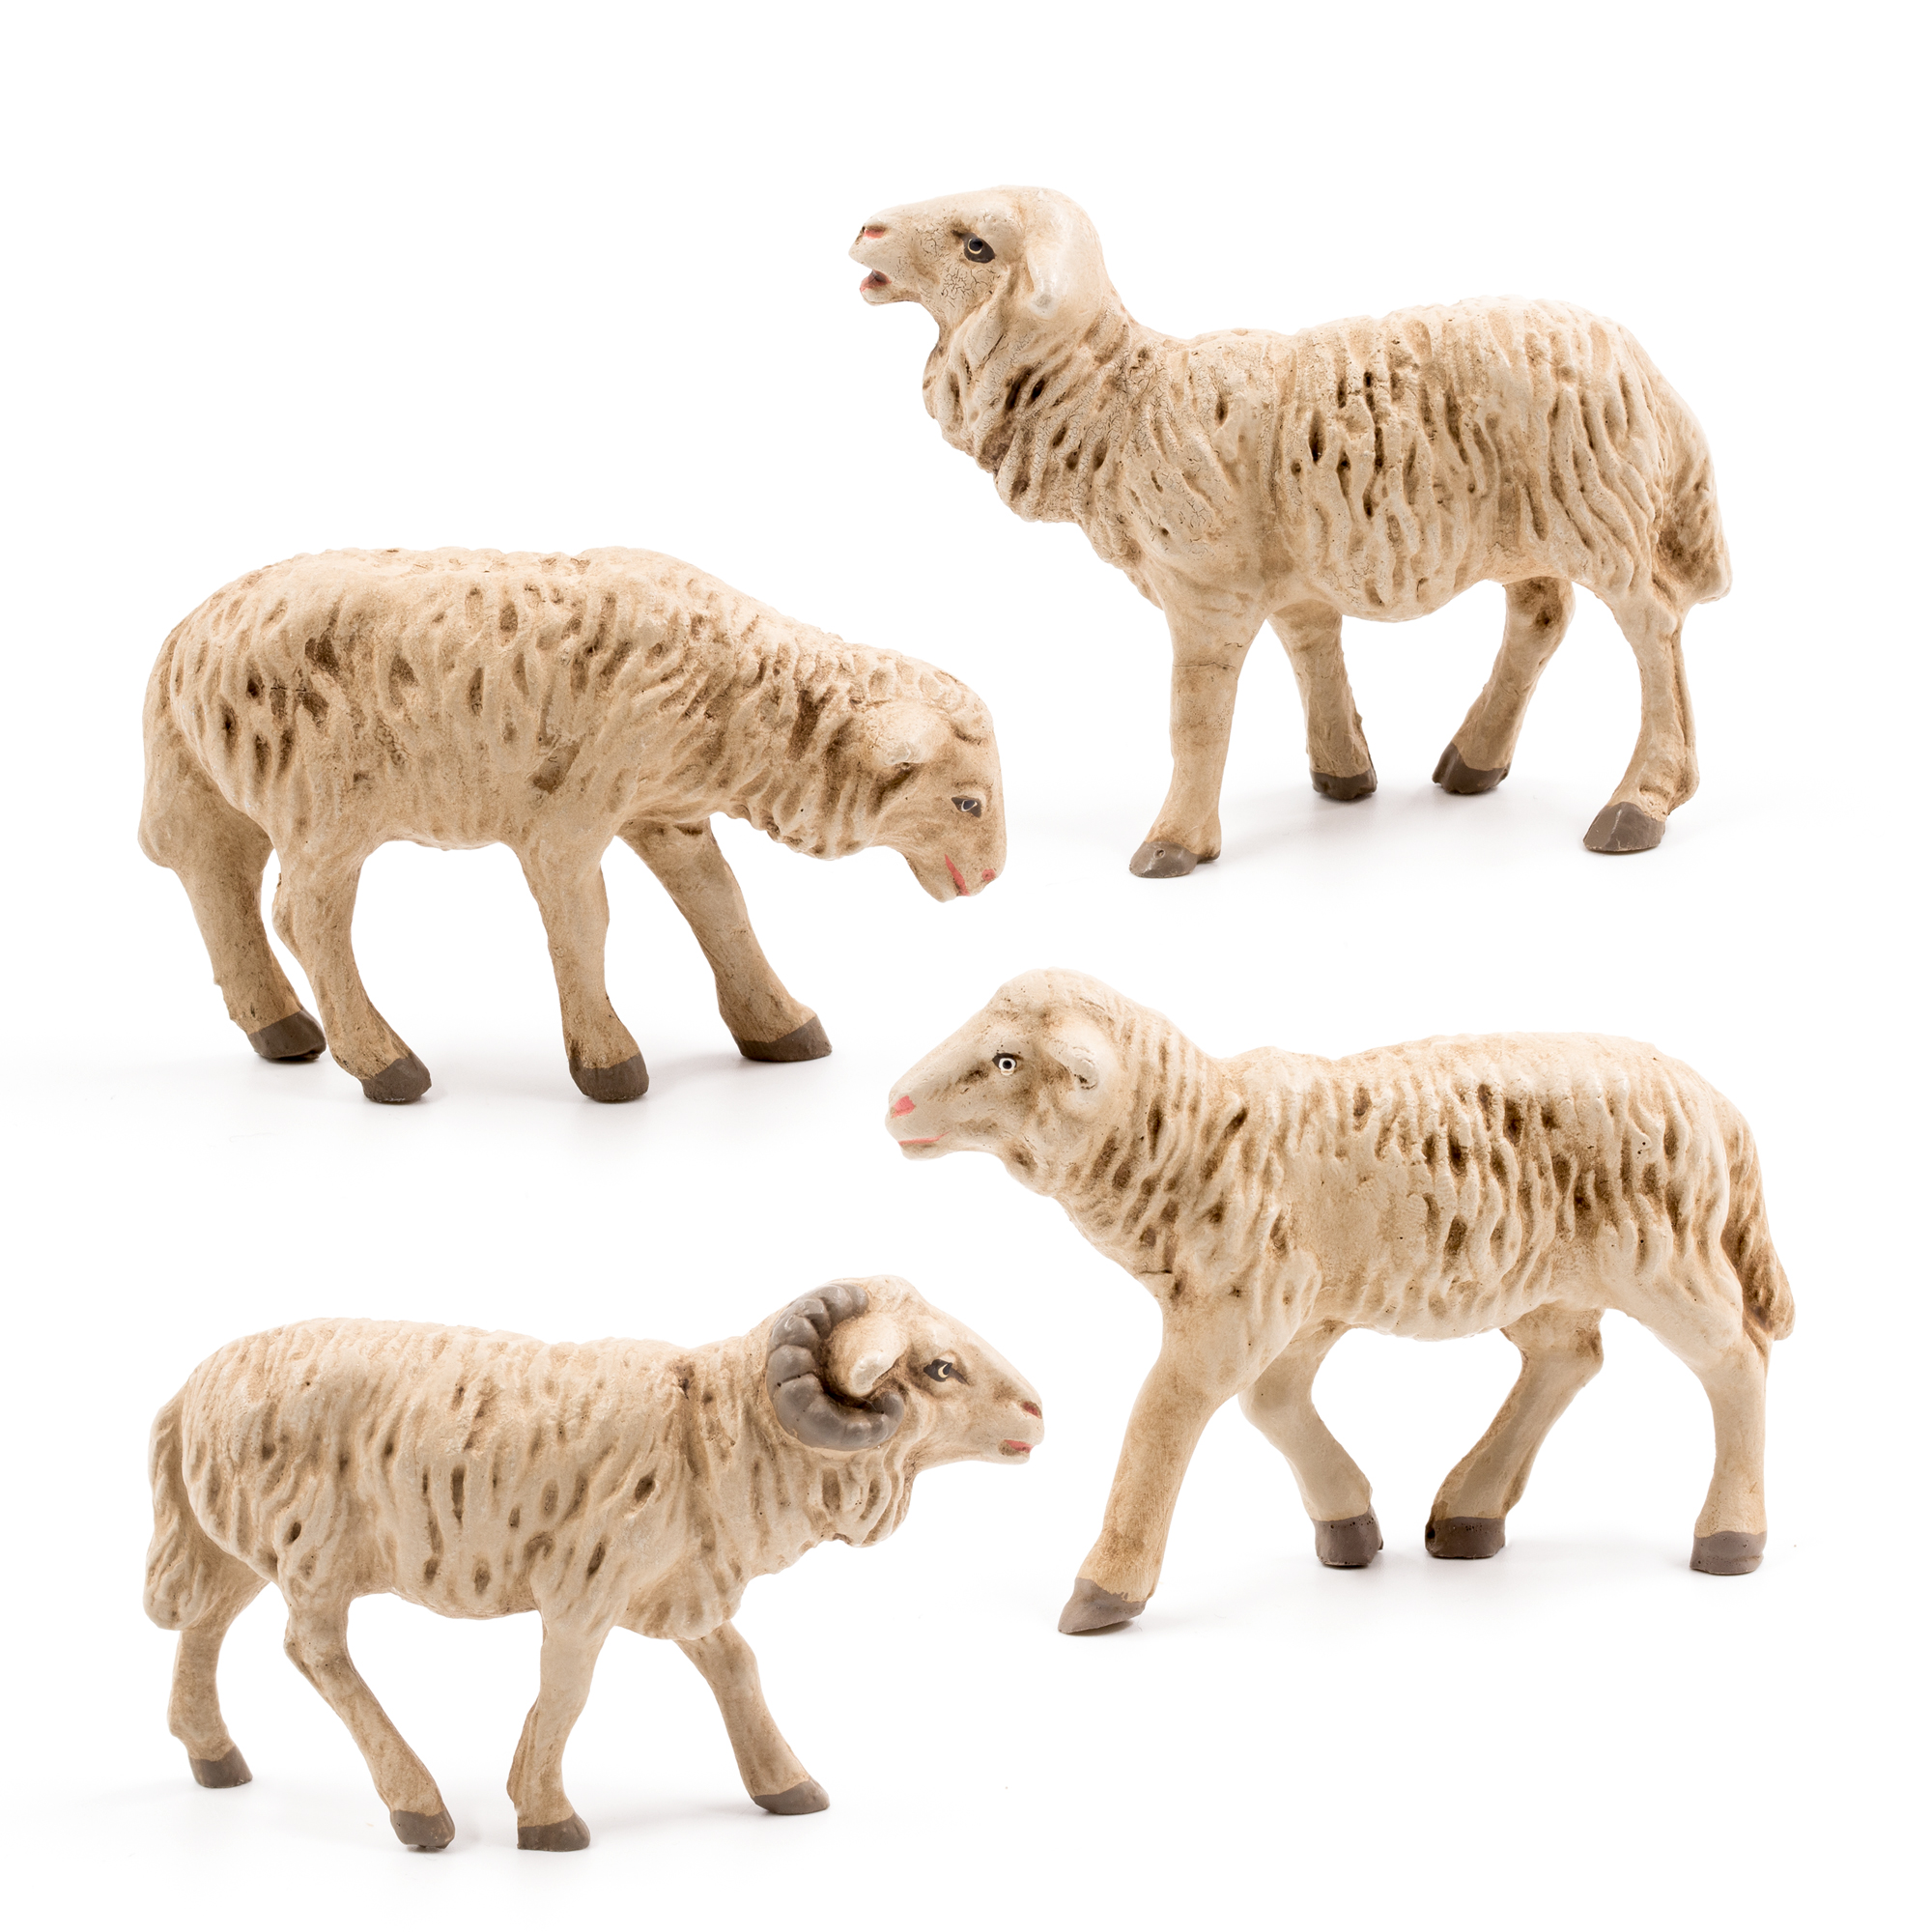 Schafgruppe, 4 Teile, zu 11 - 12cm Figuren